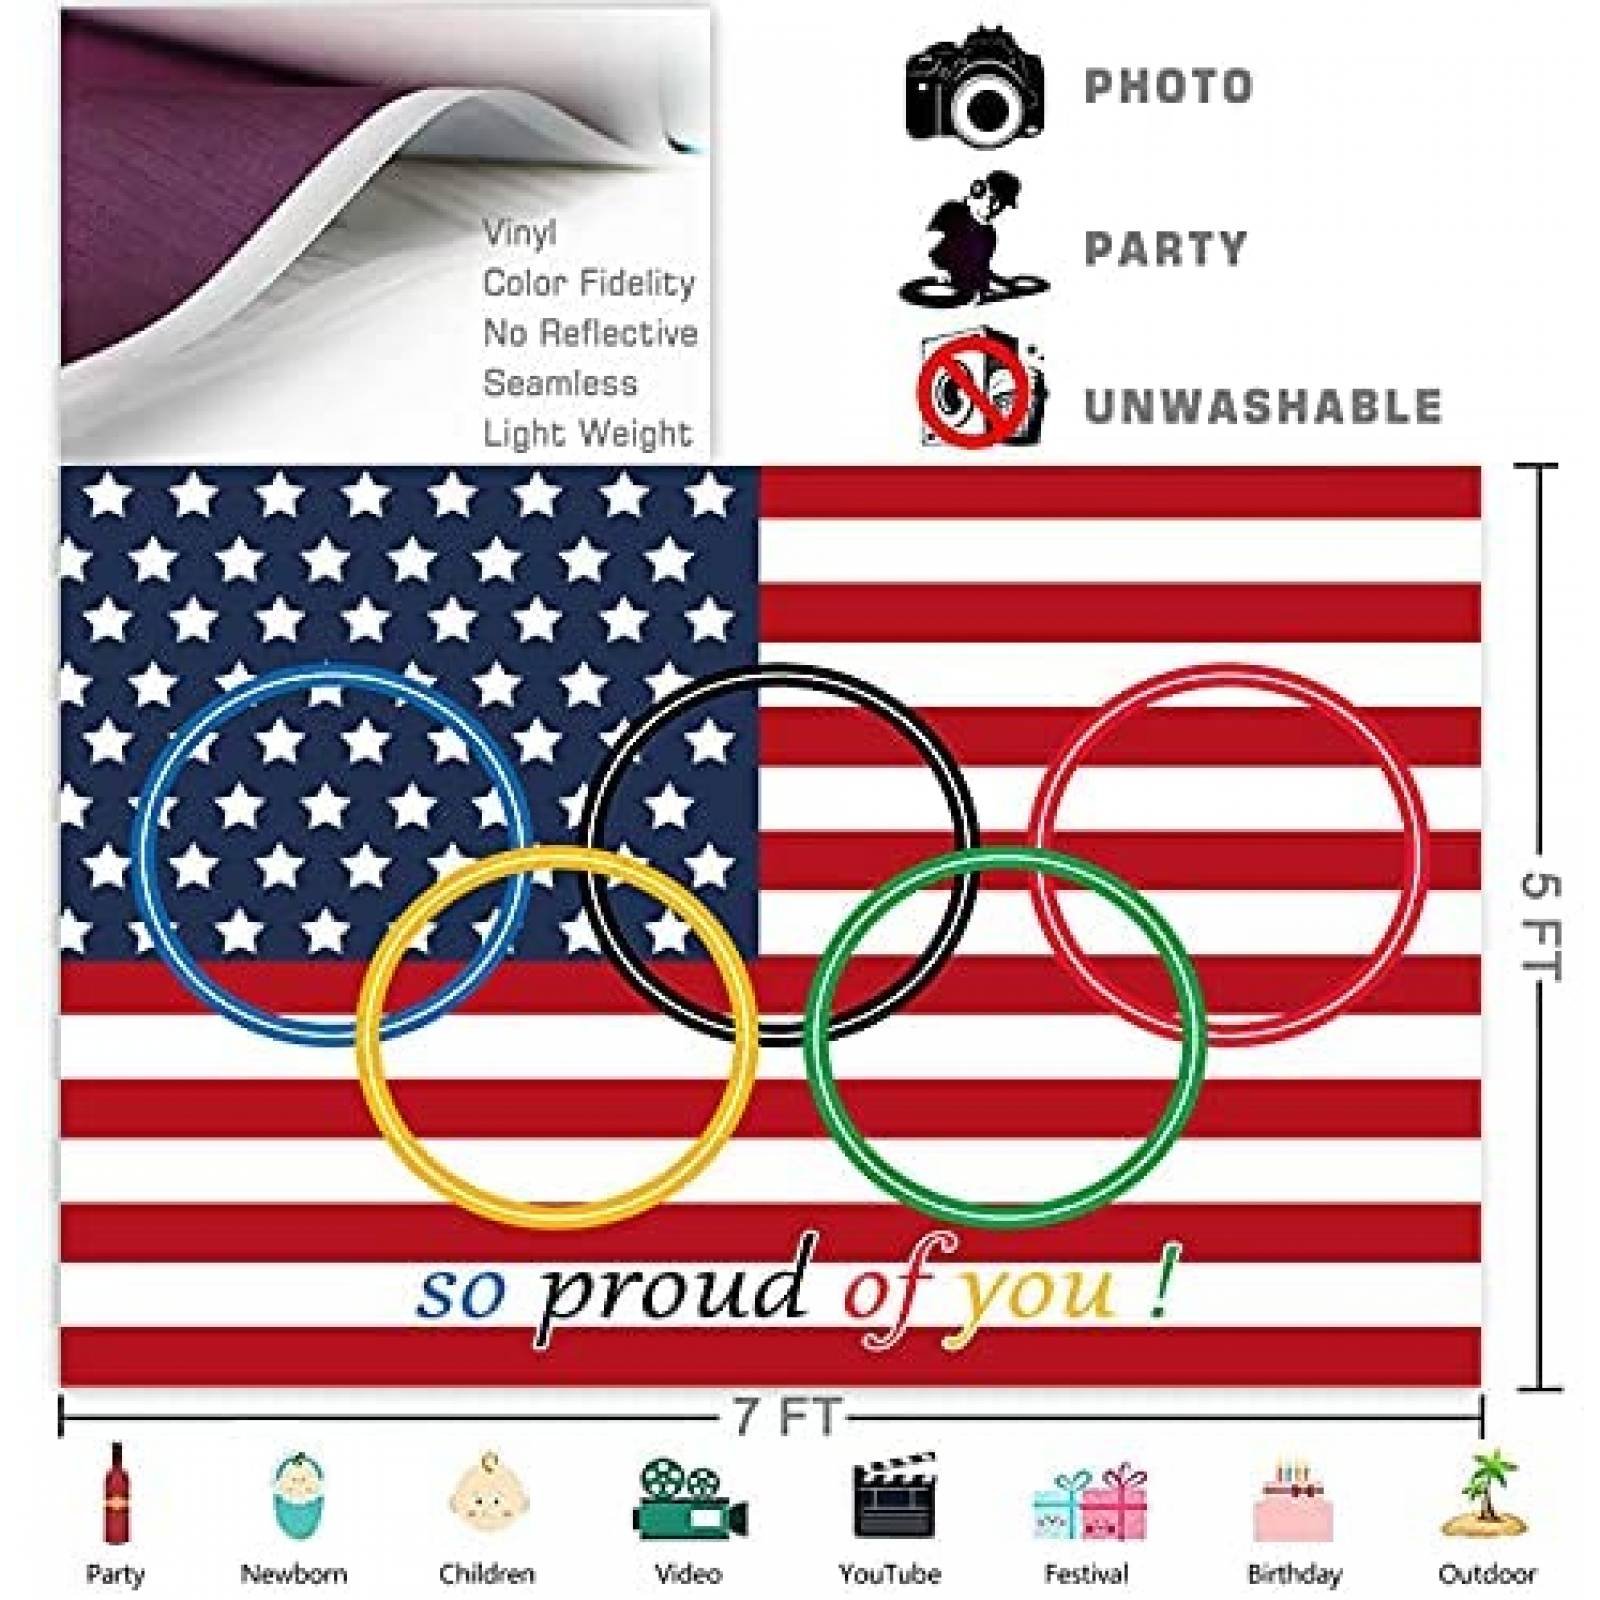 Fondo Fotografia zyckTech Bandera Olimpiadas USA Decoracion